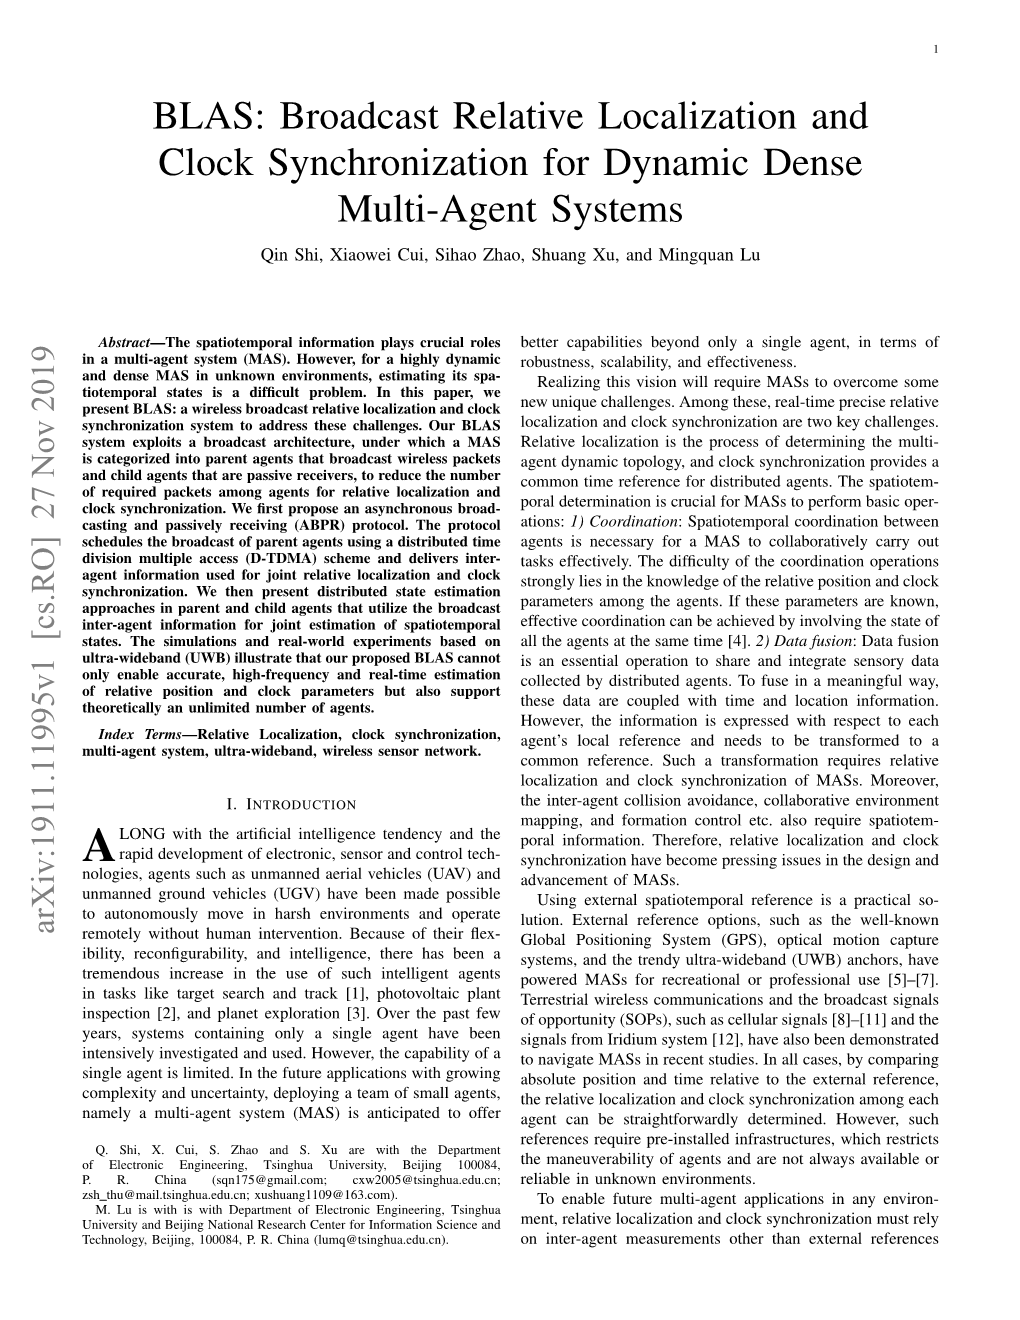 BLAS: Broadcast Relative Localization and Clock Synchronization for Dynamic Dense Multi-Agent Systems Qin Shi, Xiaowei Cui, Sihao Zhao, Shuang Xu, and Mingquan Lu